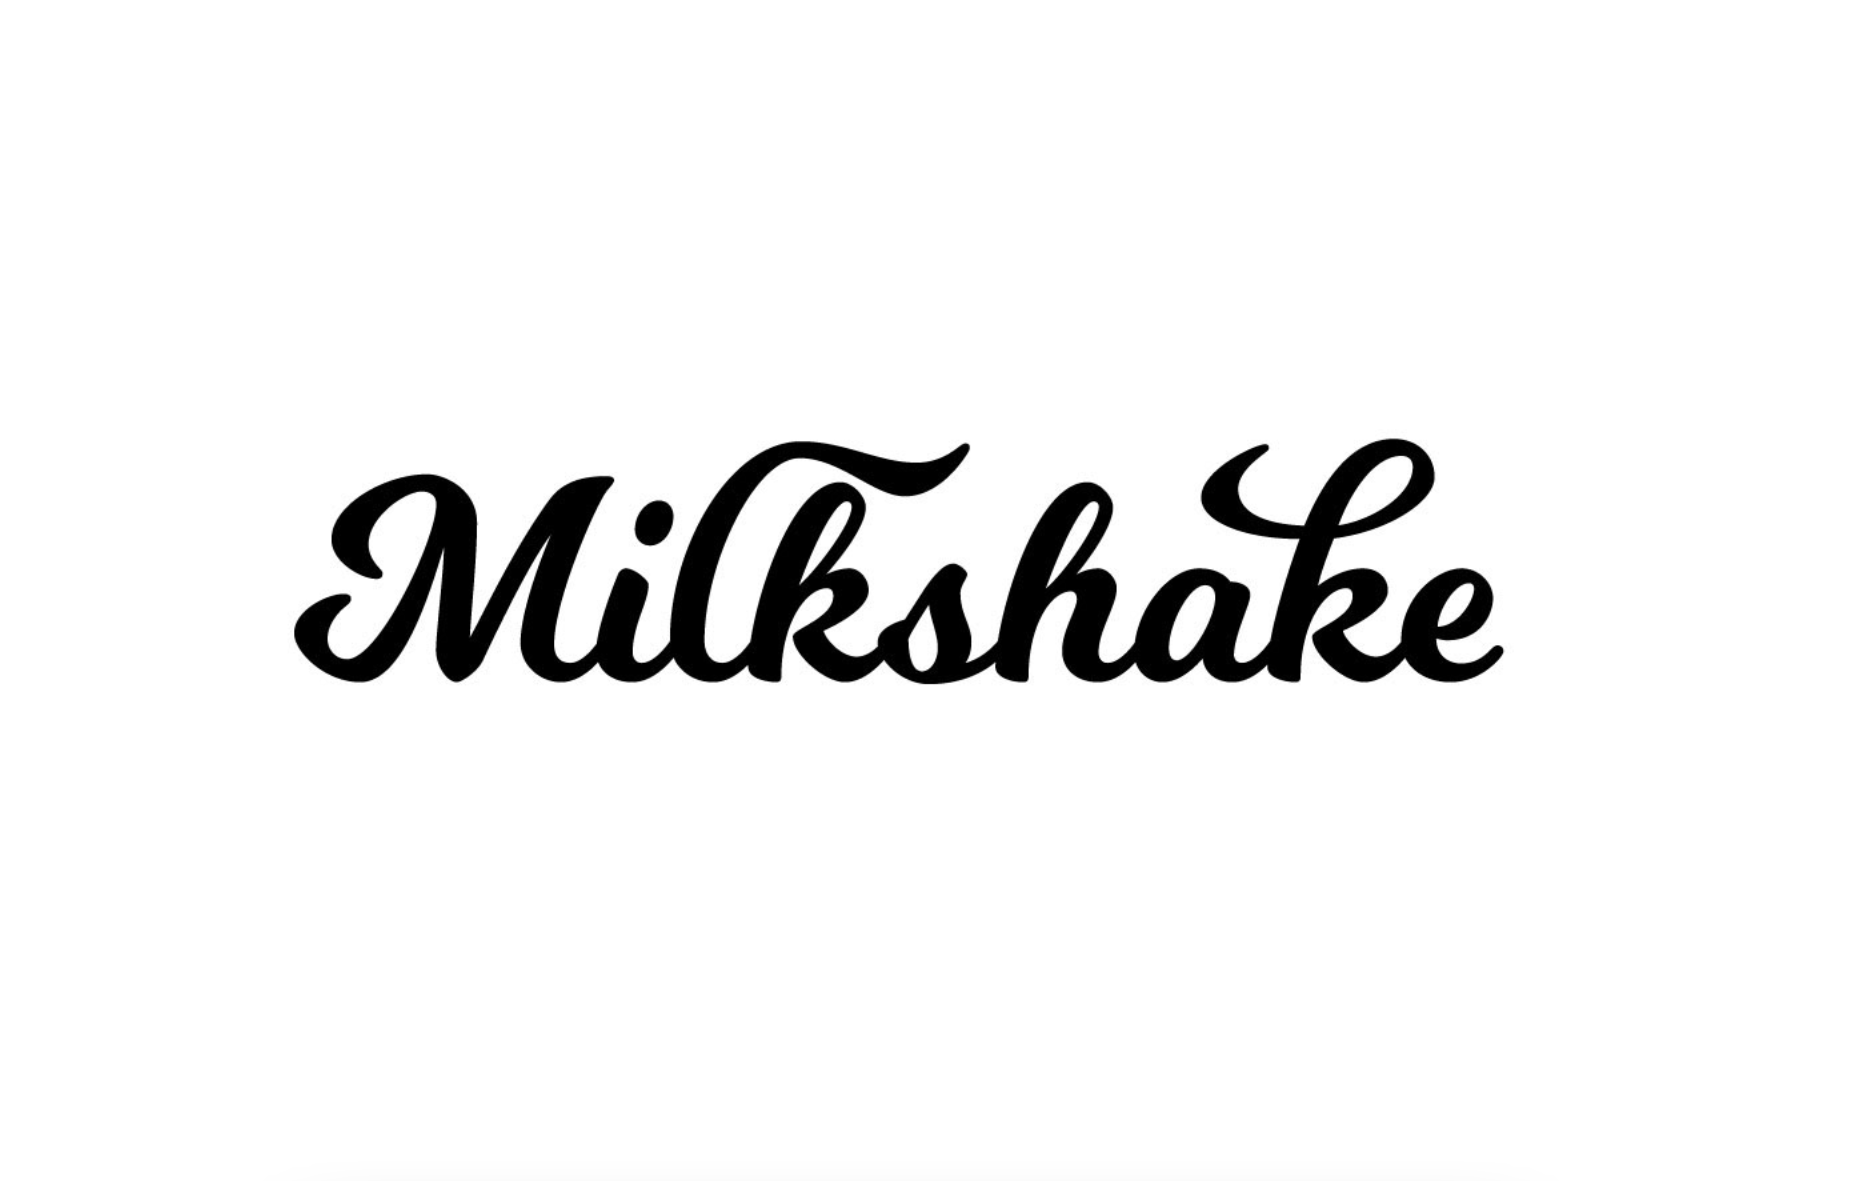 Milkshake cursive font 2022 trend